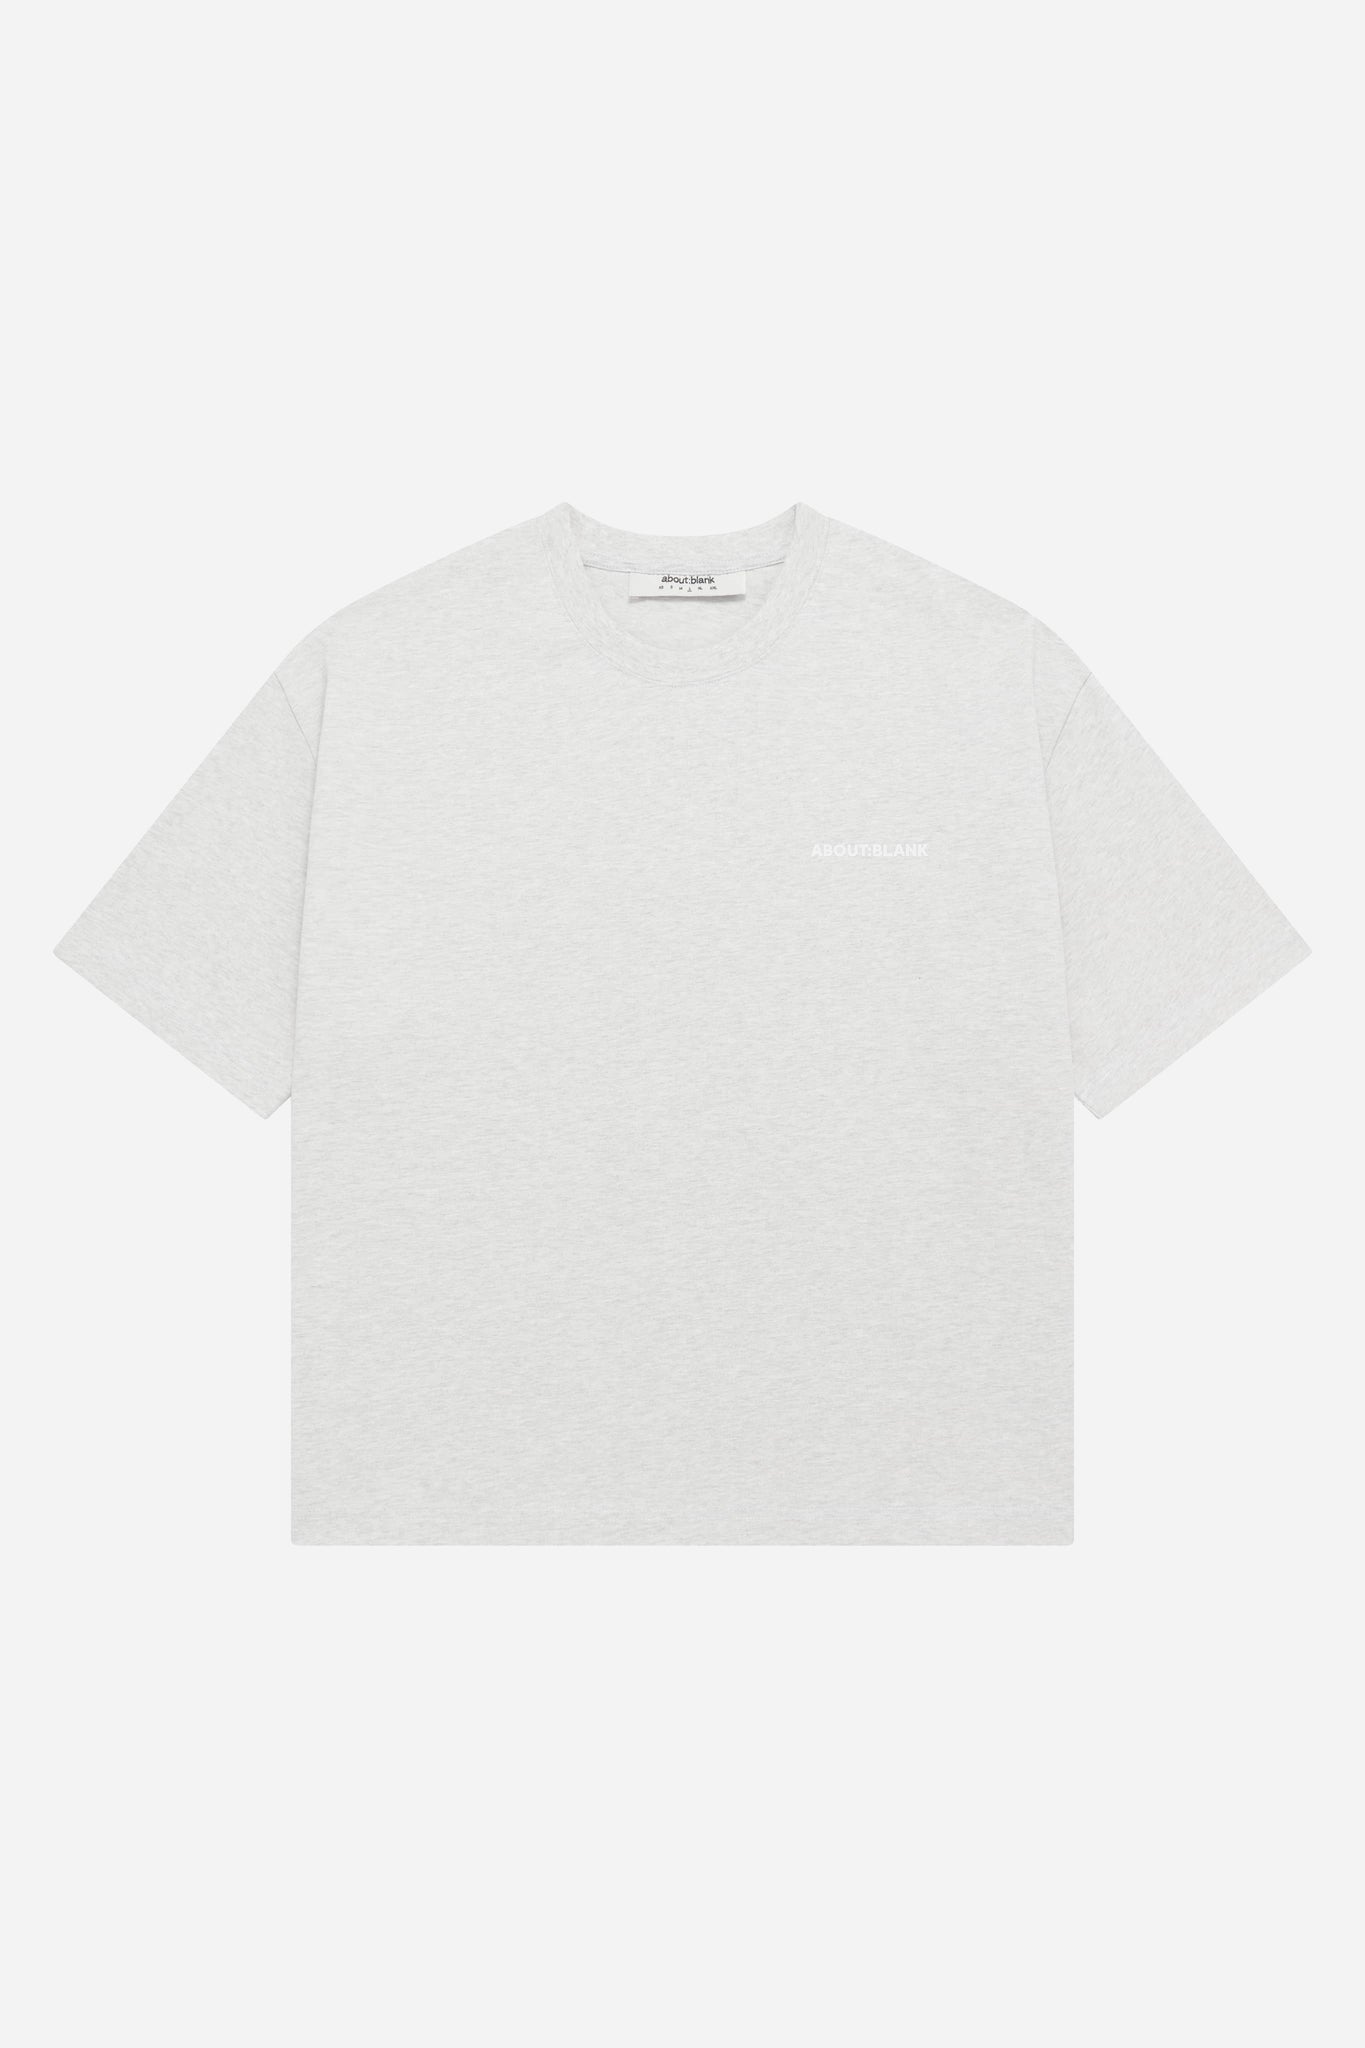 creative studio t-shirt grey marl/white